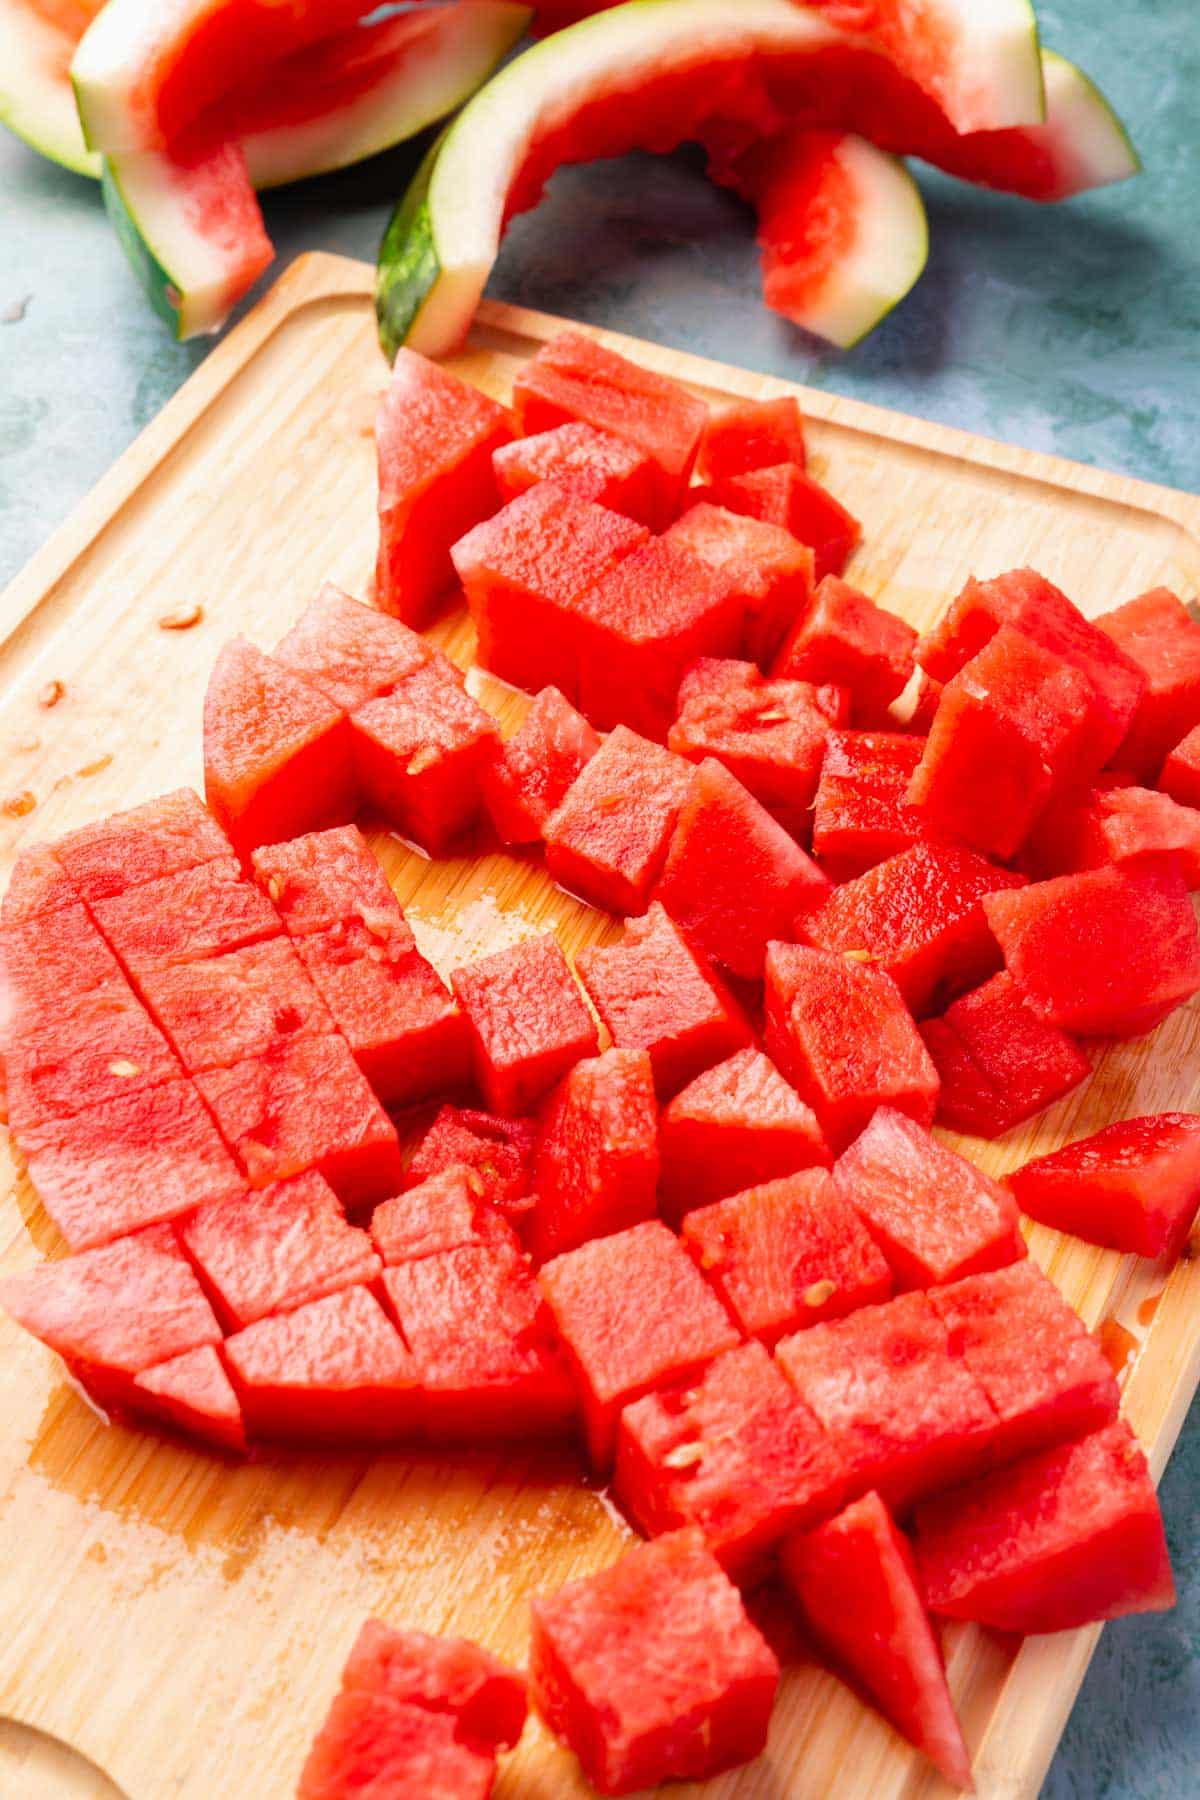 Watermelon cut into cubes on a wood cutting board.